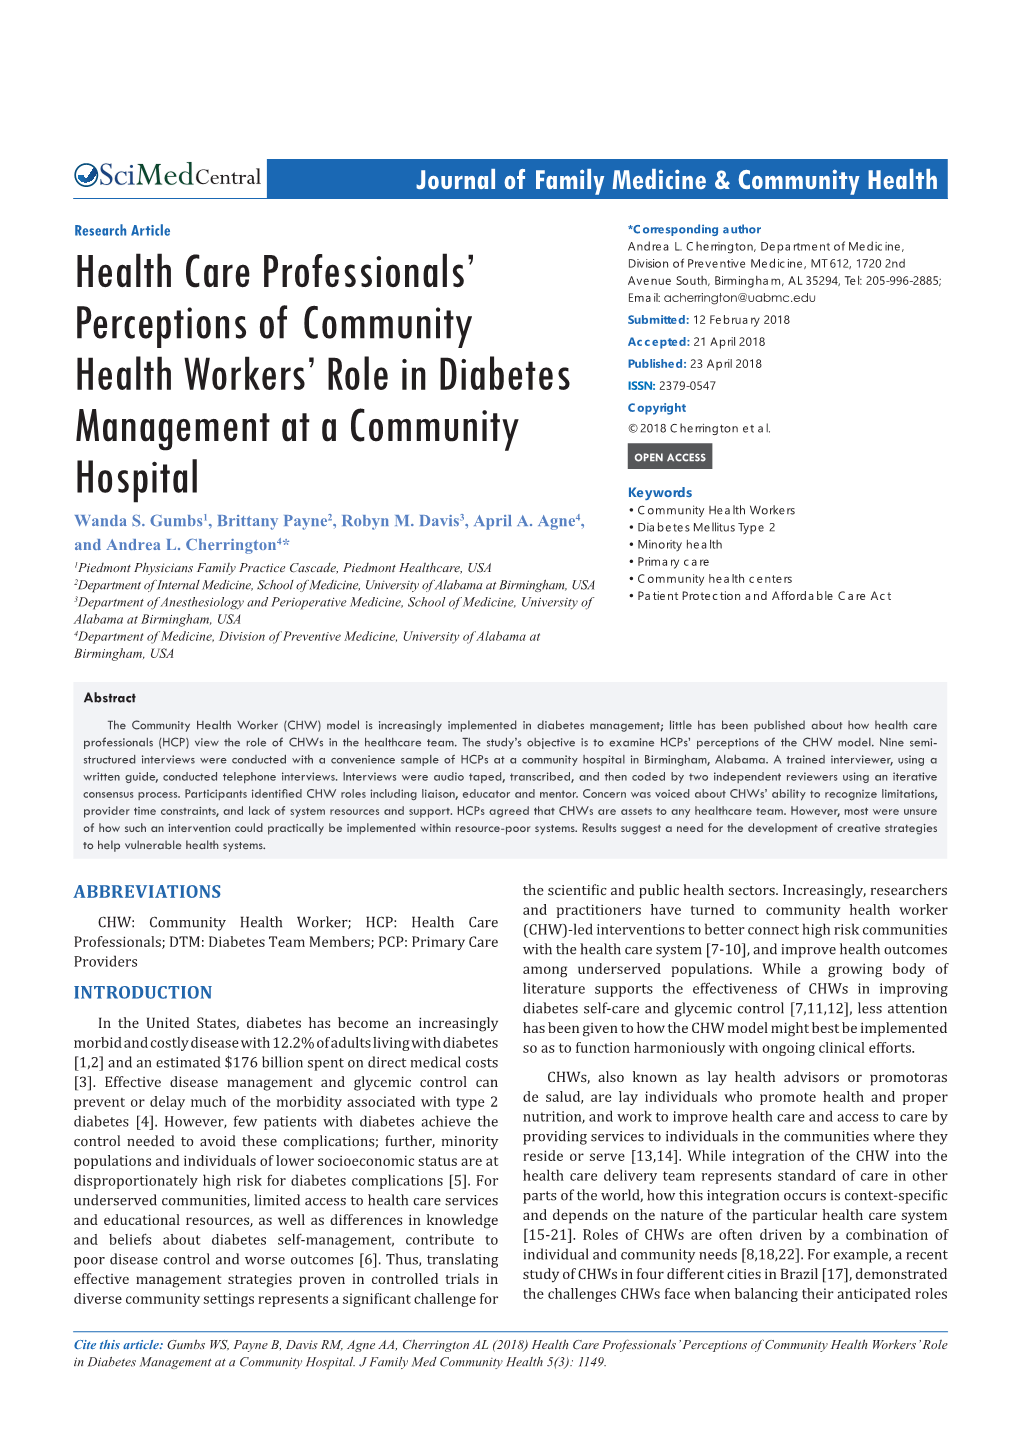 Health Care Professionals' Perceptions of Community Health